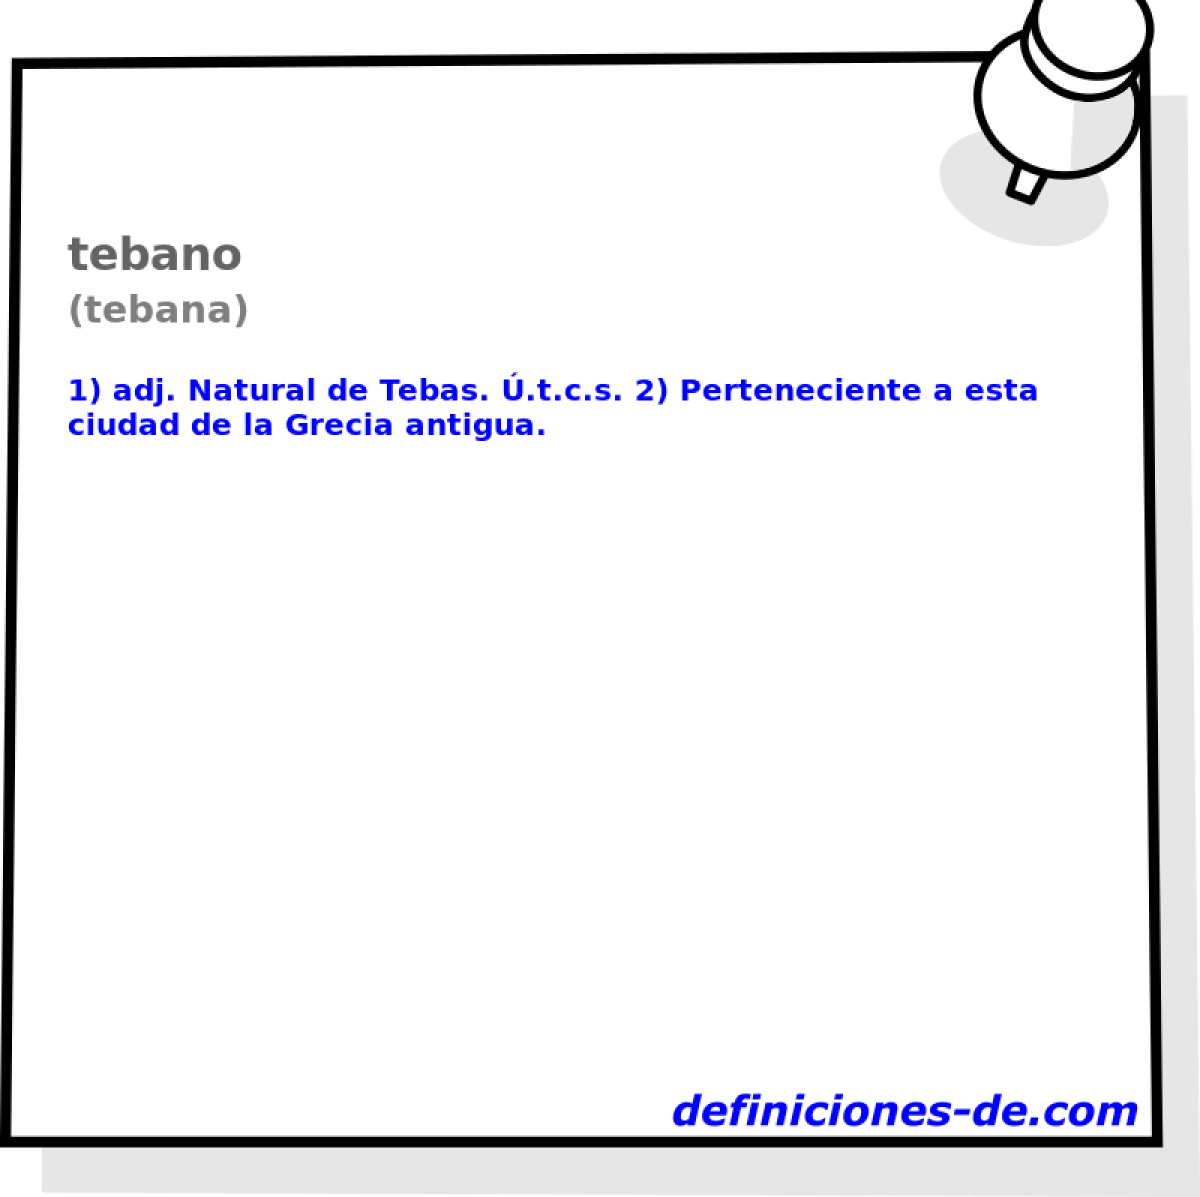 tebano (tebana)